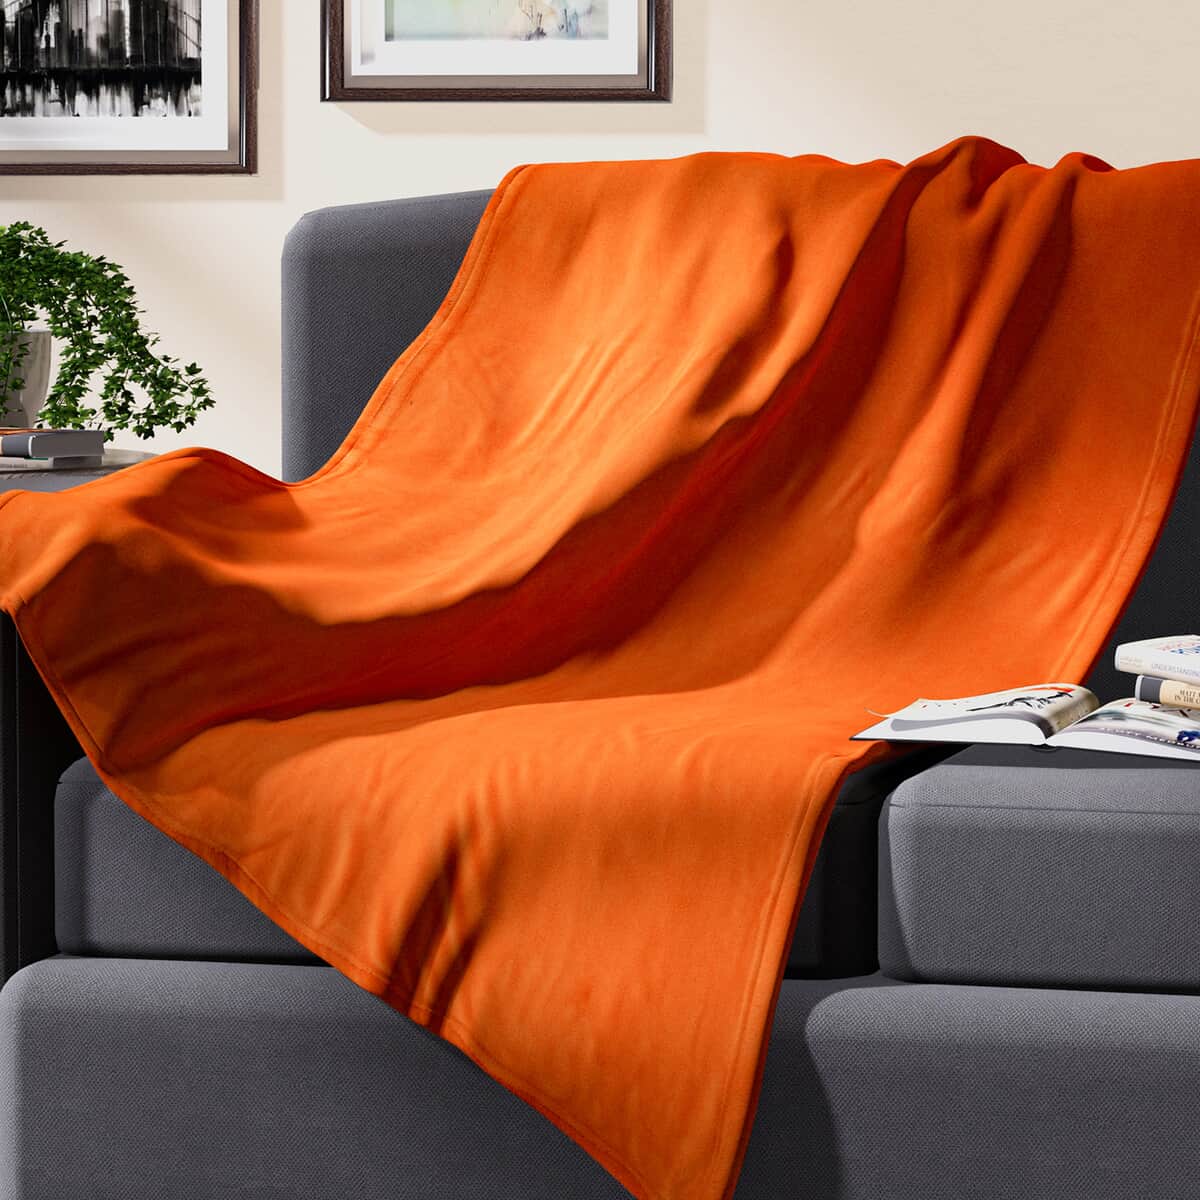 Homesmart Orange Solid Coral Fleece Warmth and Soft Blanket image number 0